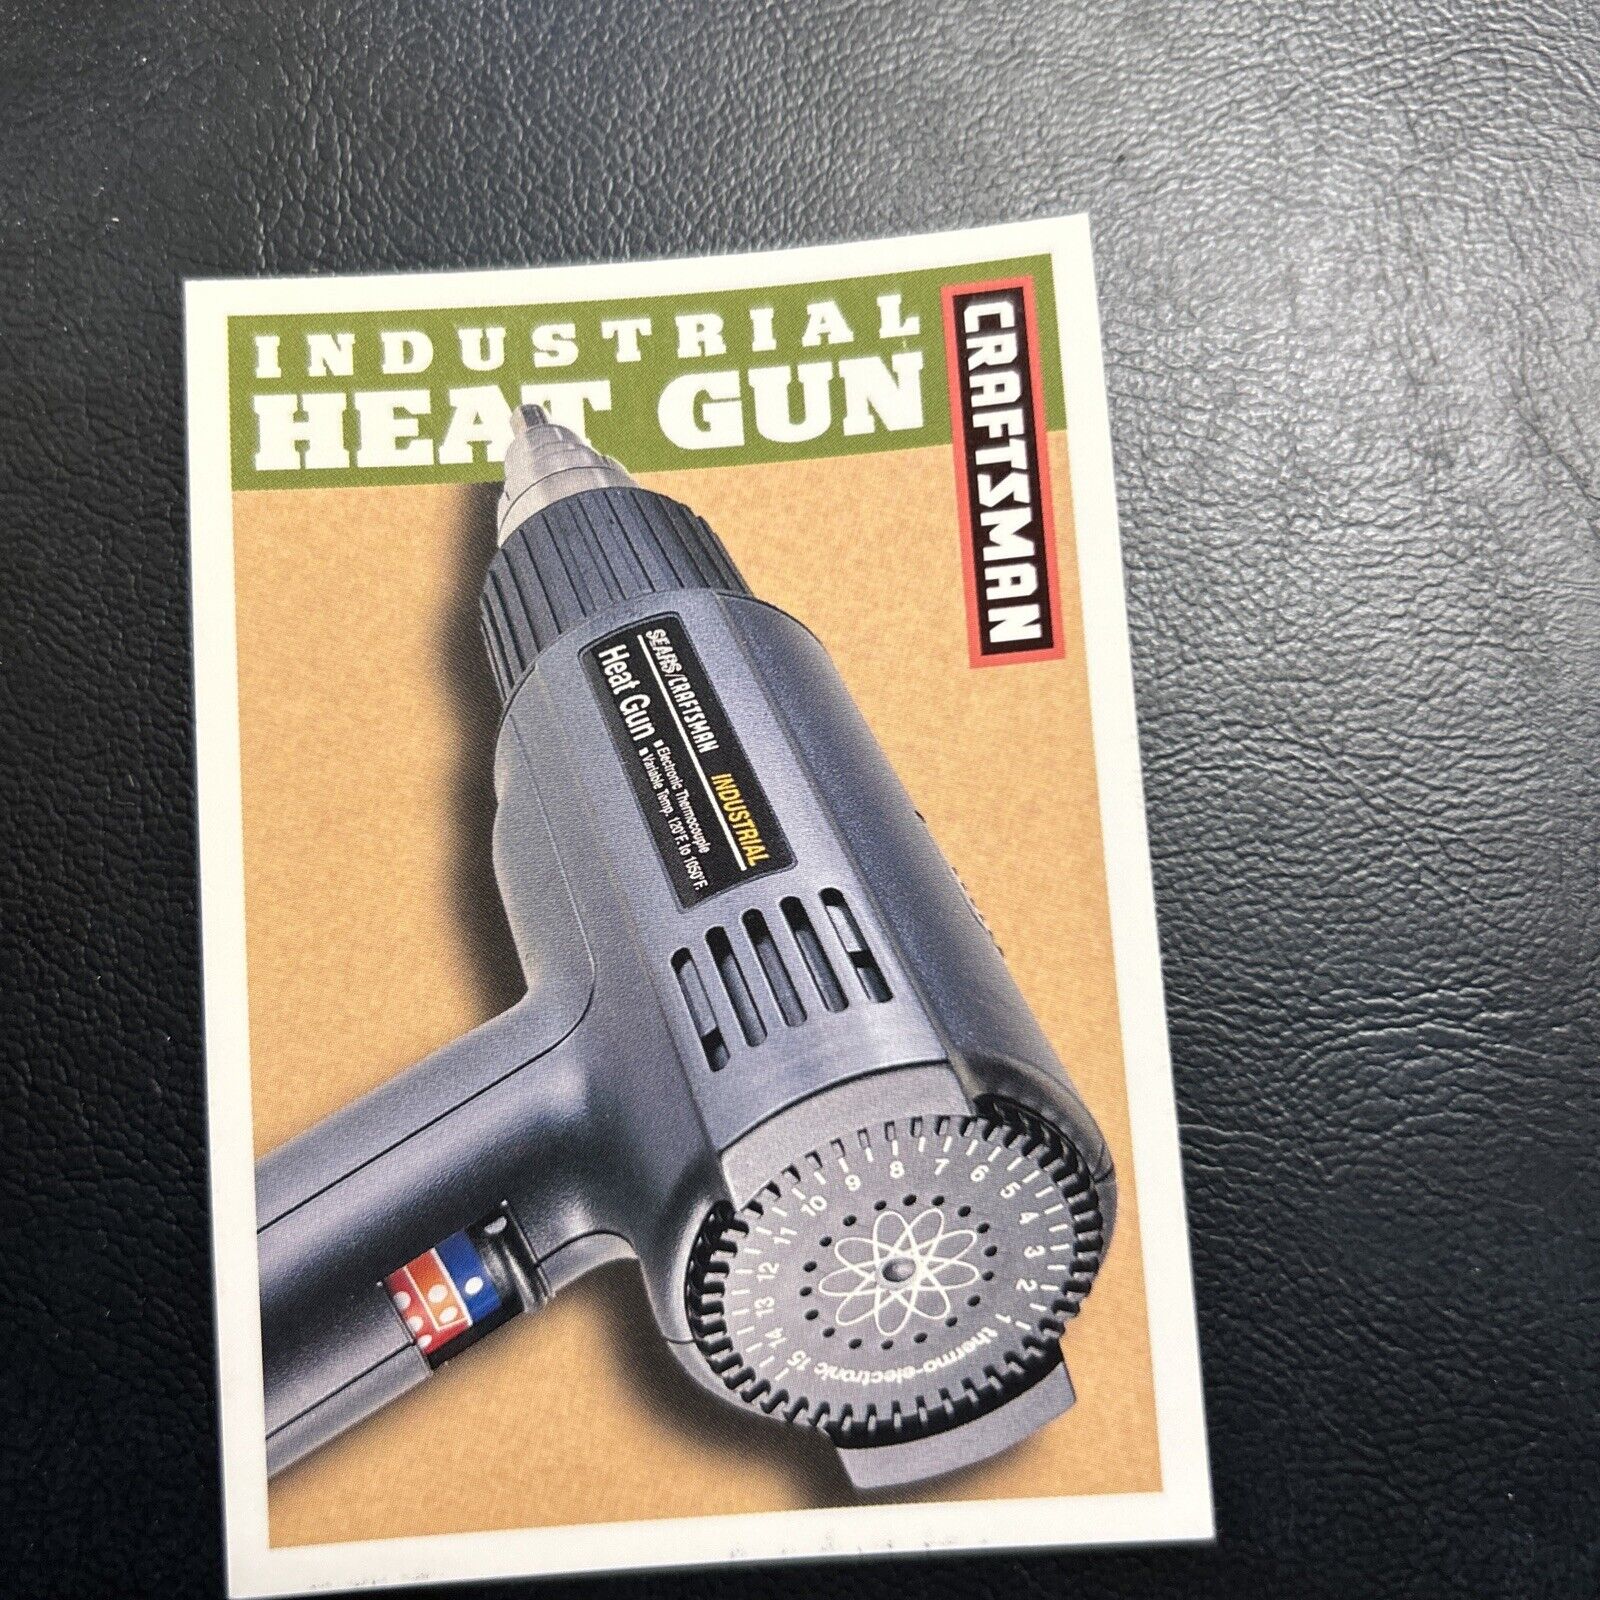 Card Jb98d Craftsman Sears Roebuck 1994/95 #37 Industrial Heat Gun